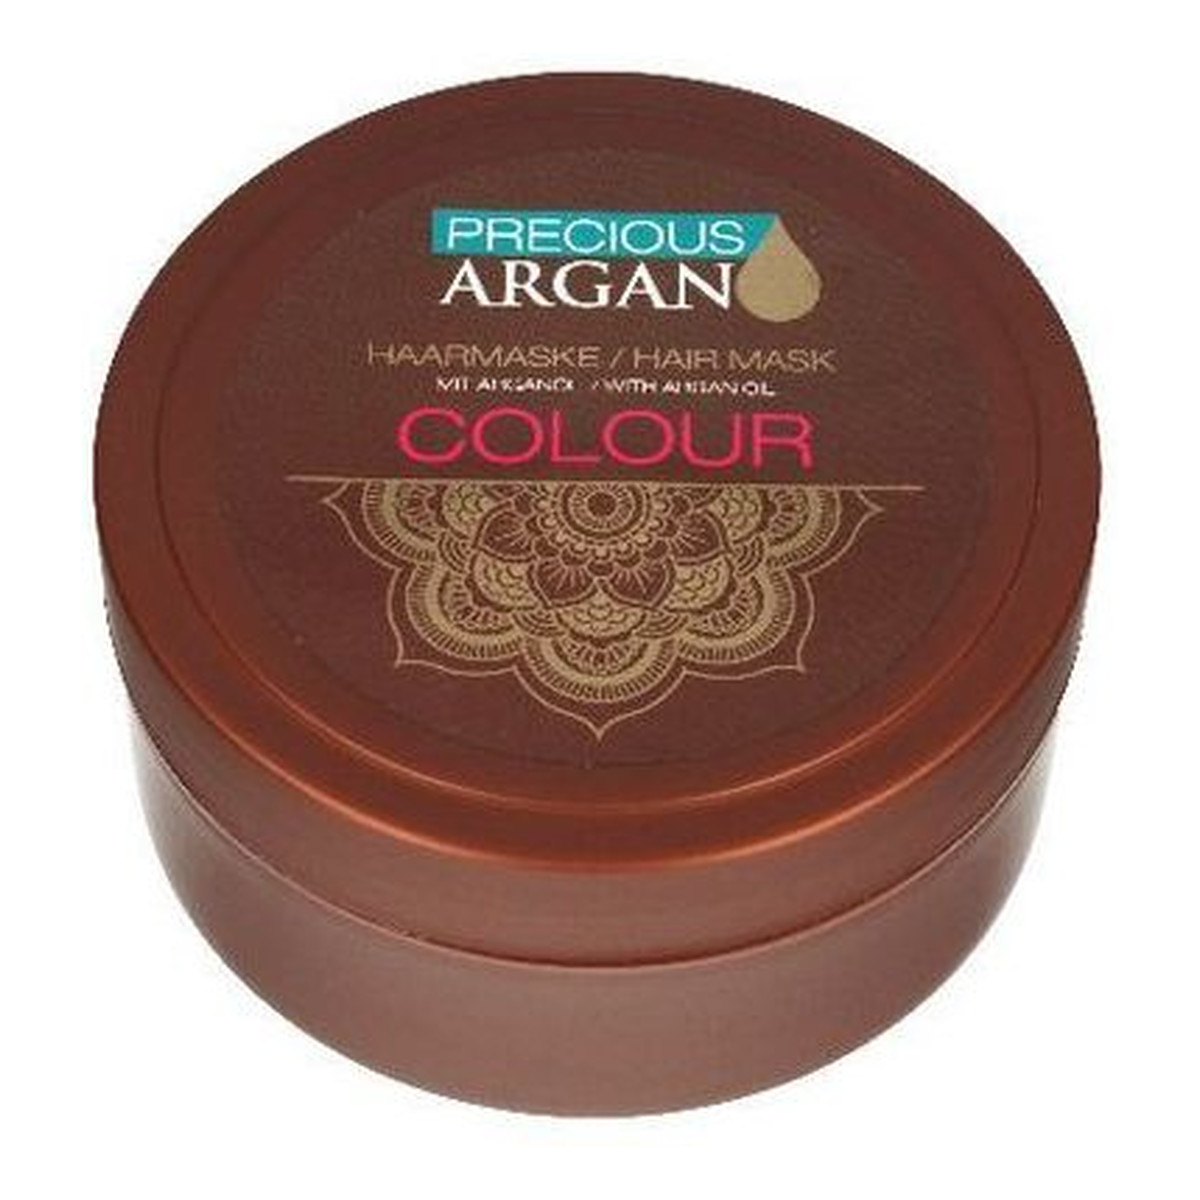 Allvernum Precious Argan Colour Maska do włosów farbowanych 250ml